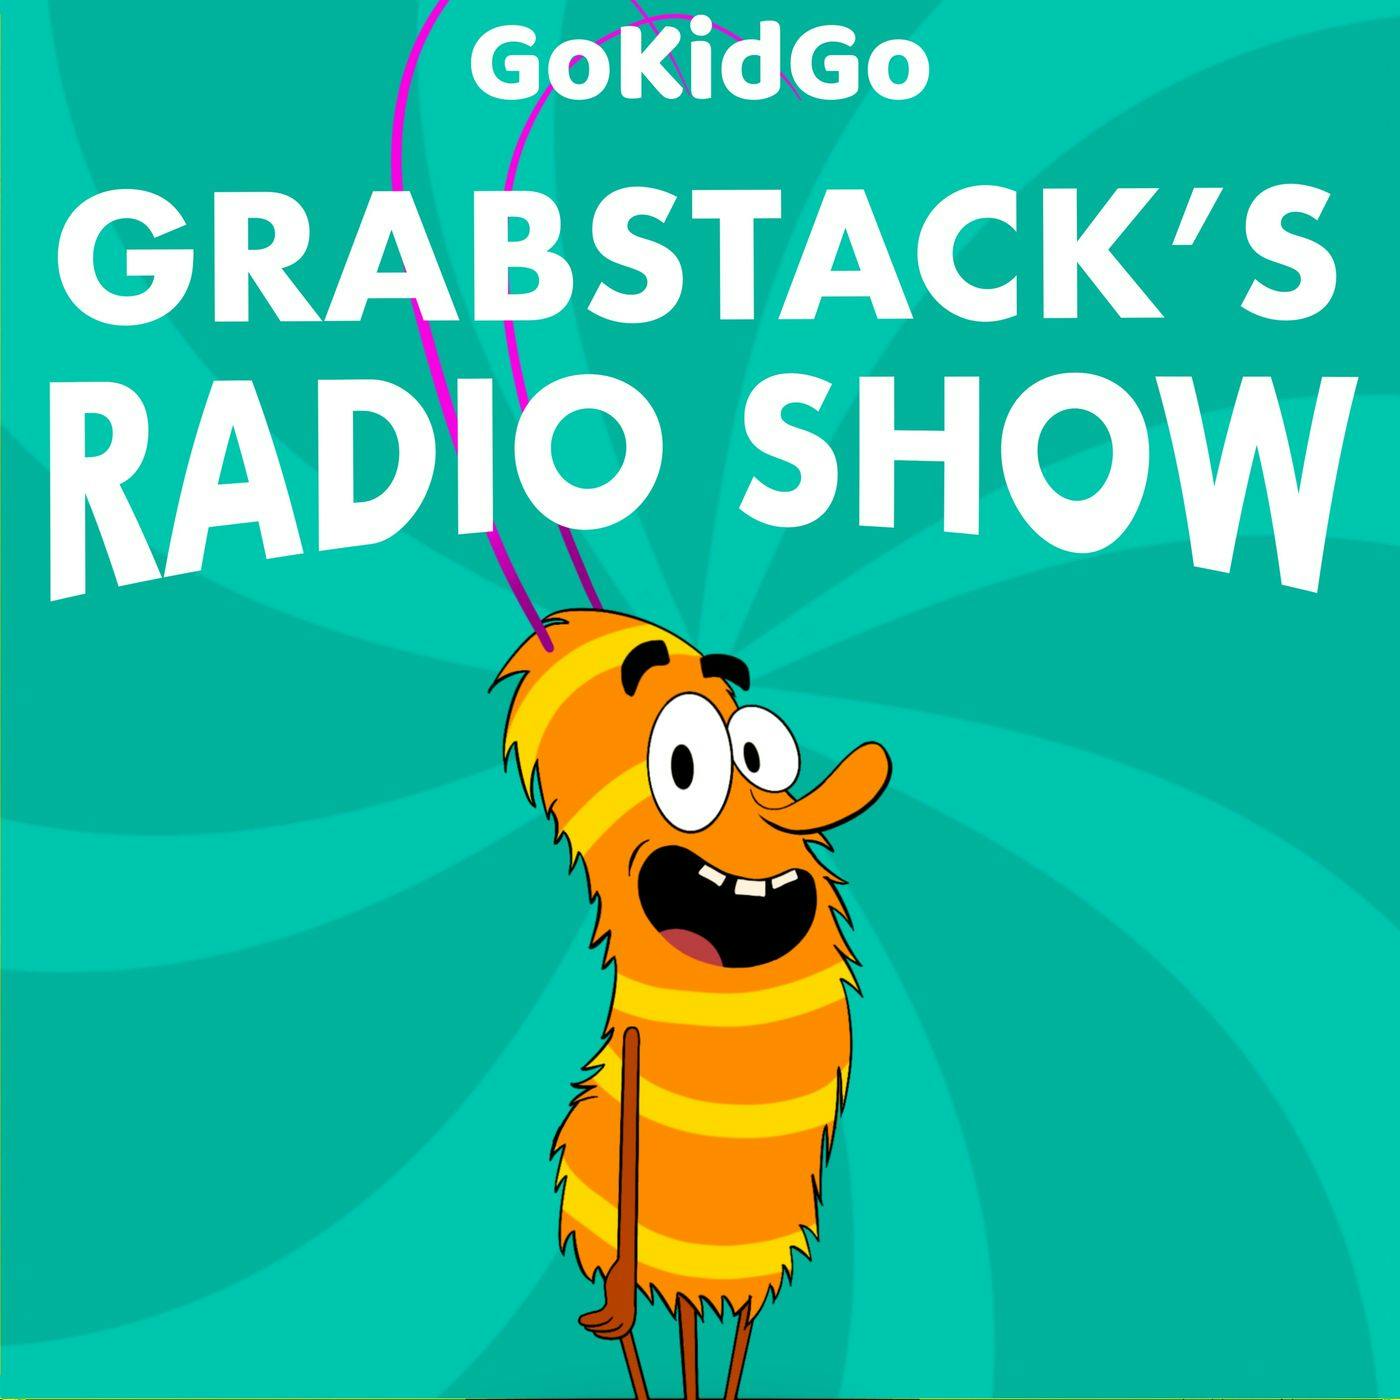 S1E11 - Grabstack Radio Show: Riddle Fest